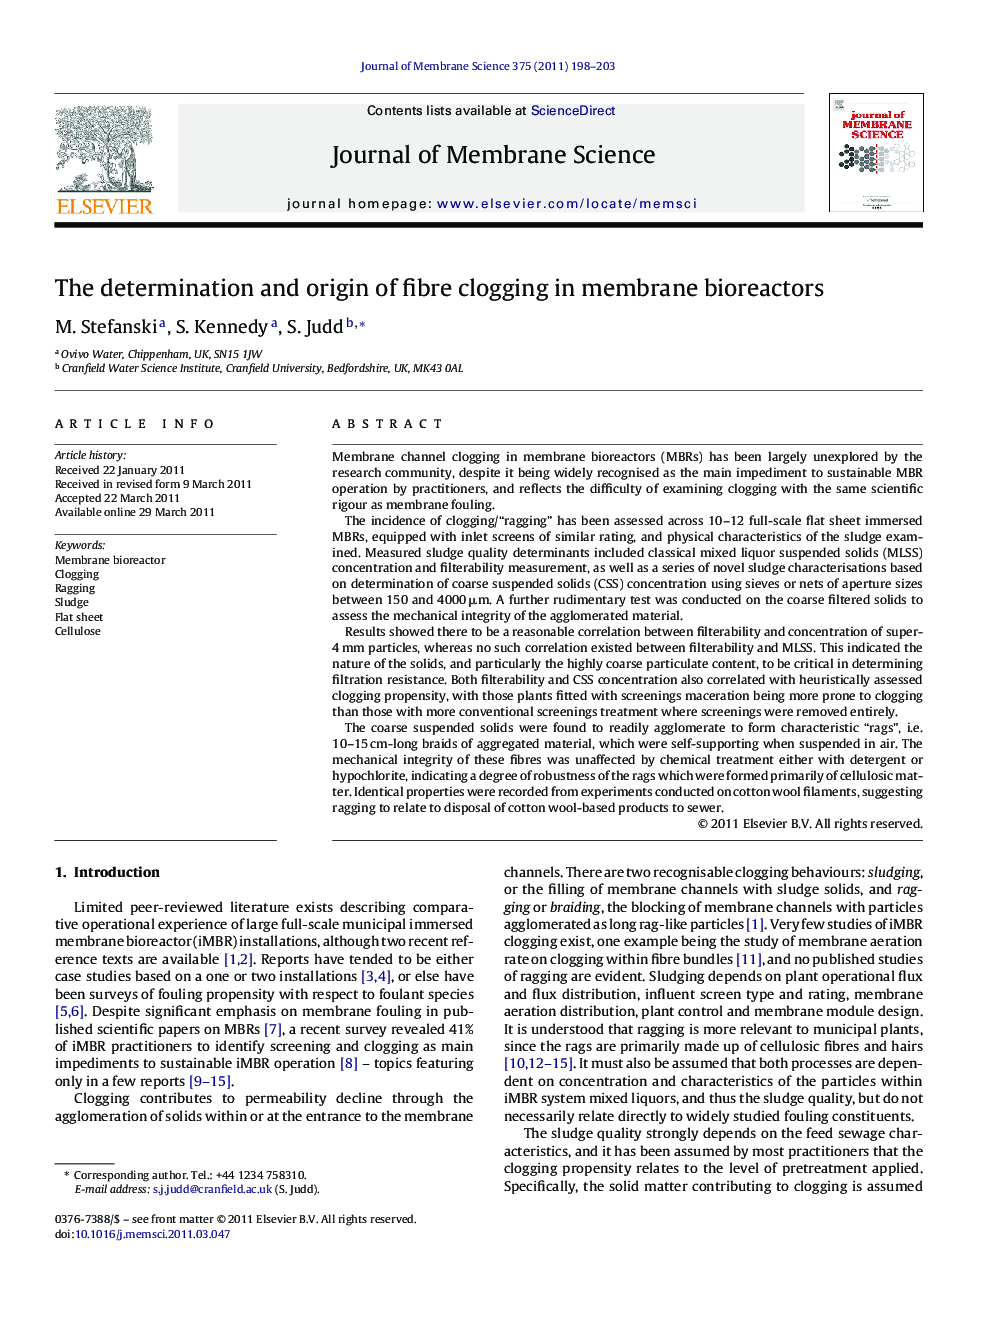 The determination and origin of fibre clogging in membrane bioreactors